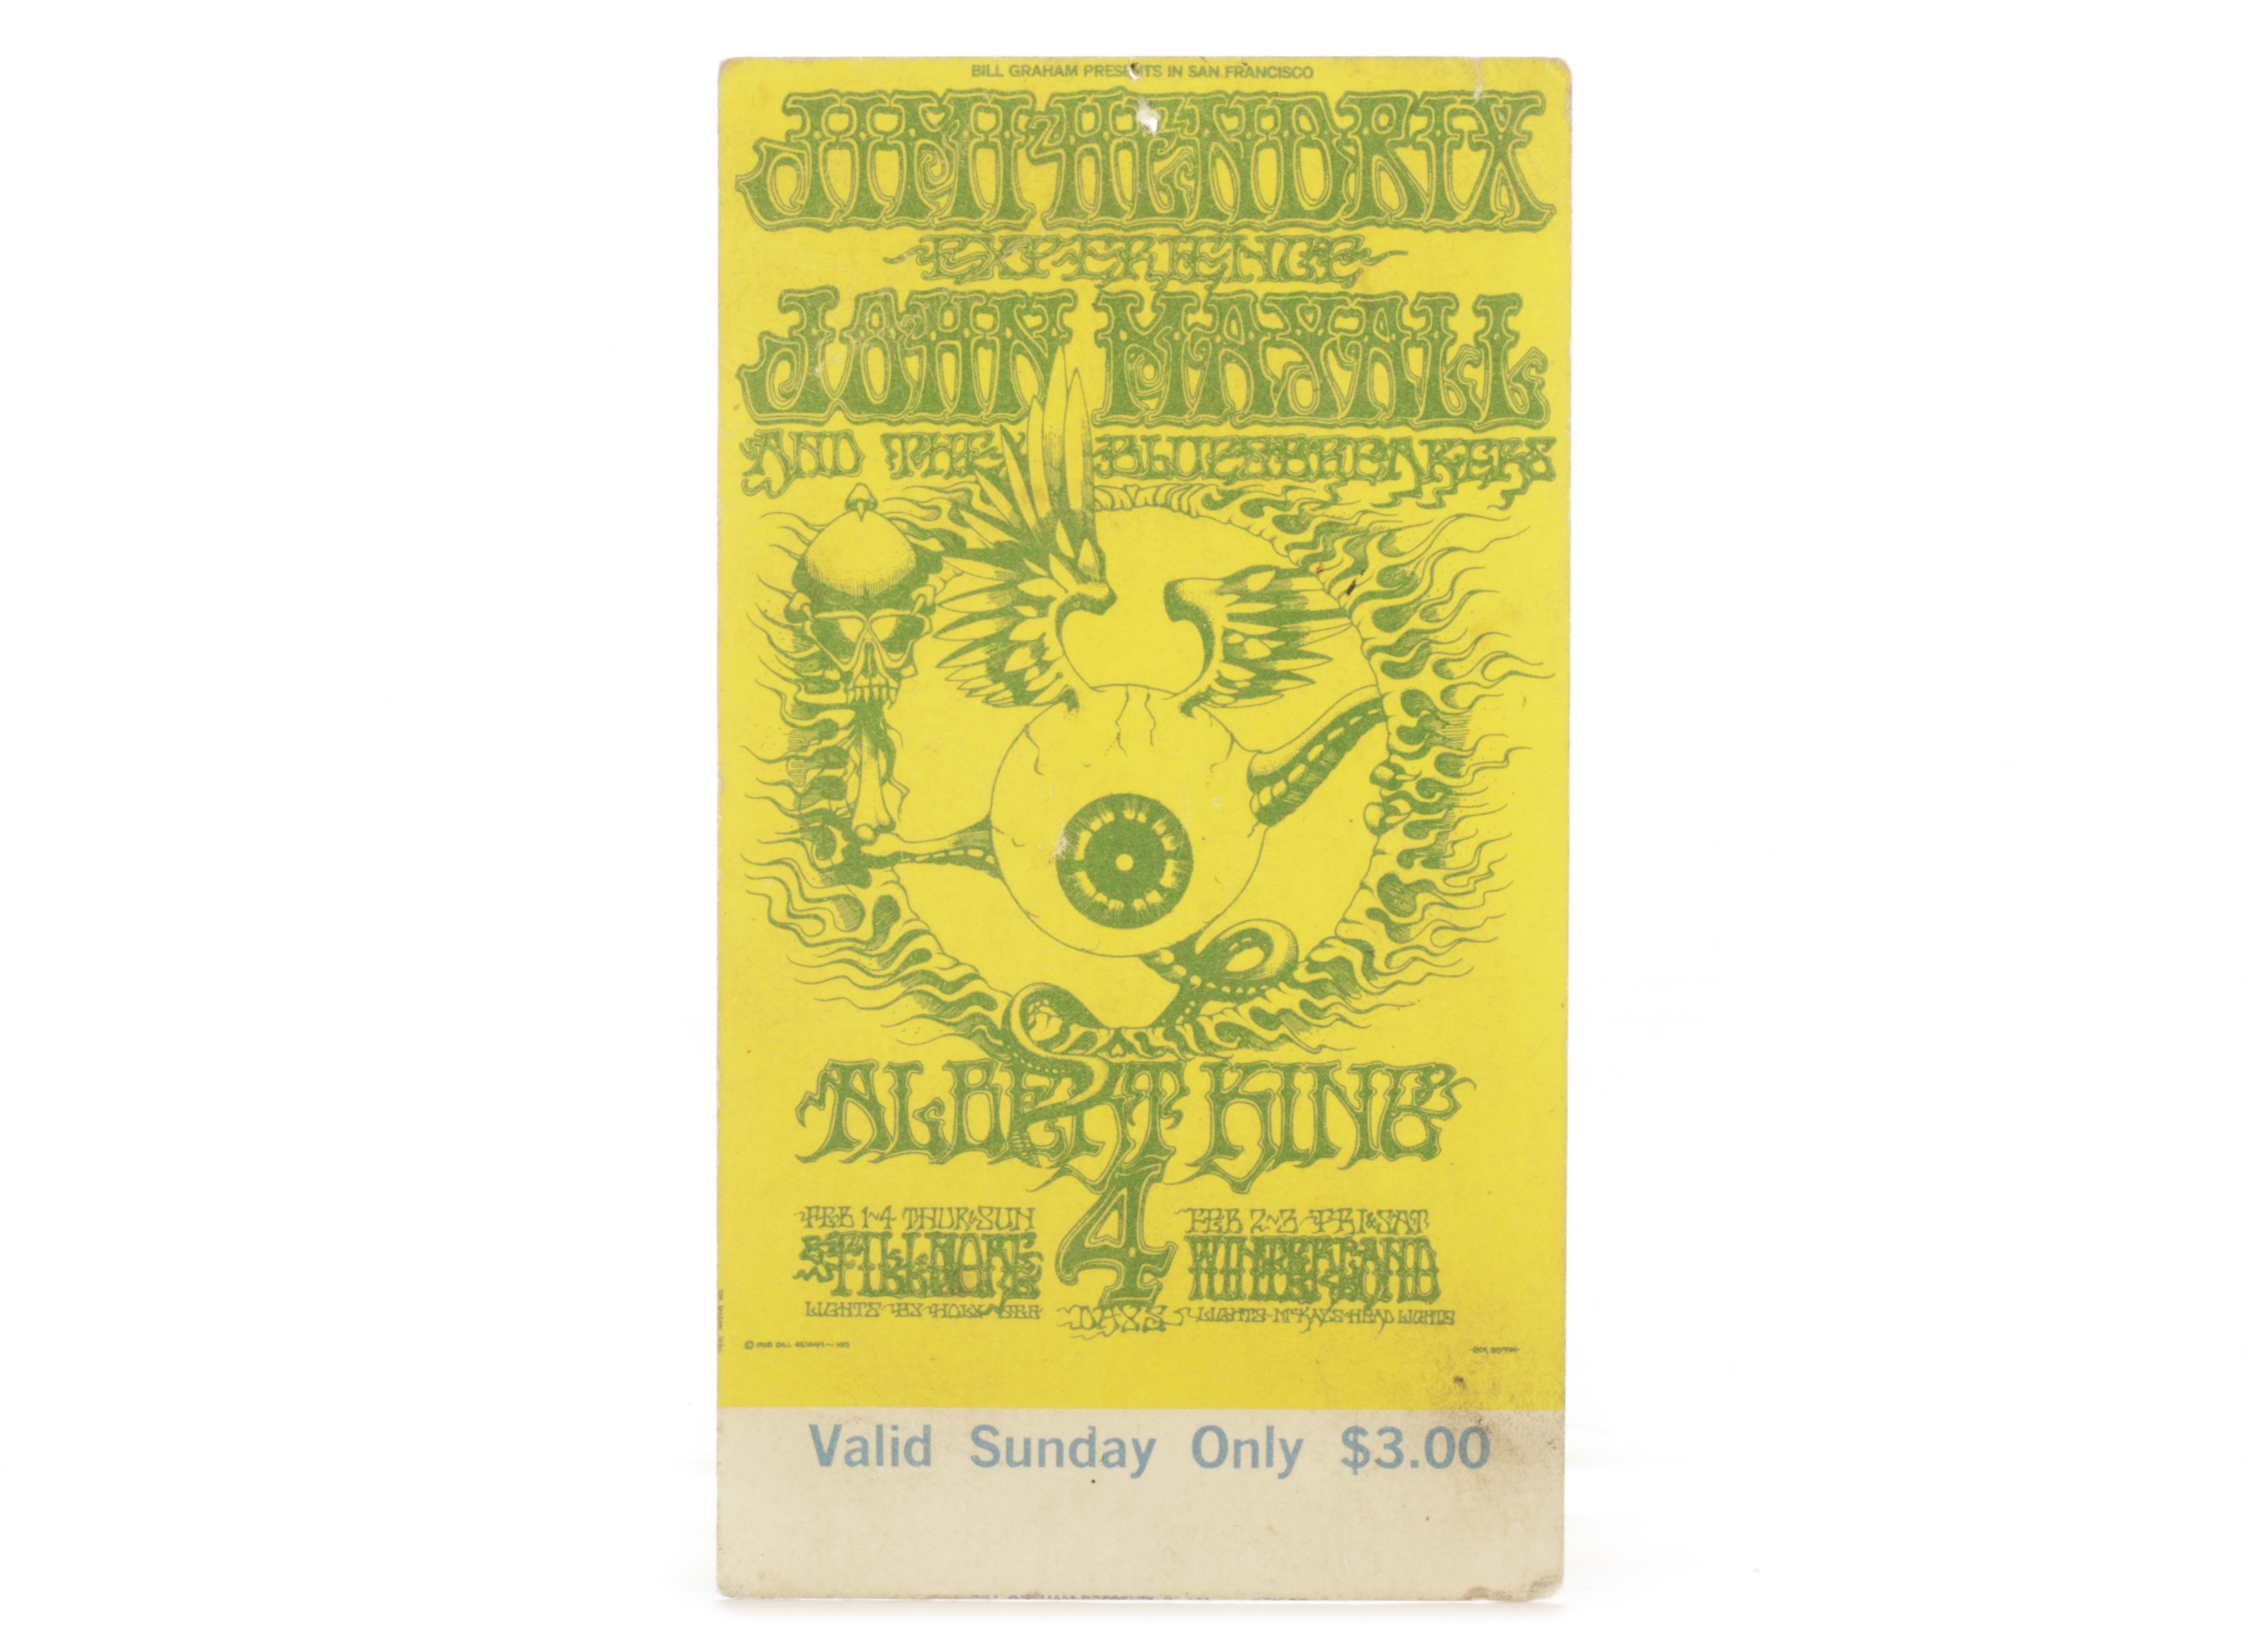 Jimi Hendrix Experience / Noel Redding: Original ticket for Fillmore Auditorium San Francisco